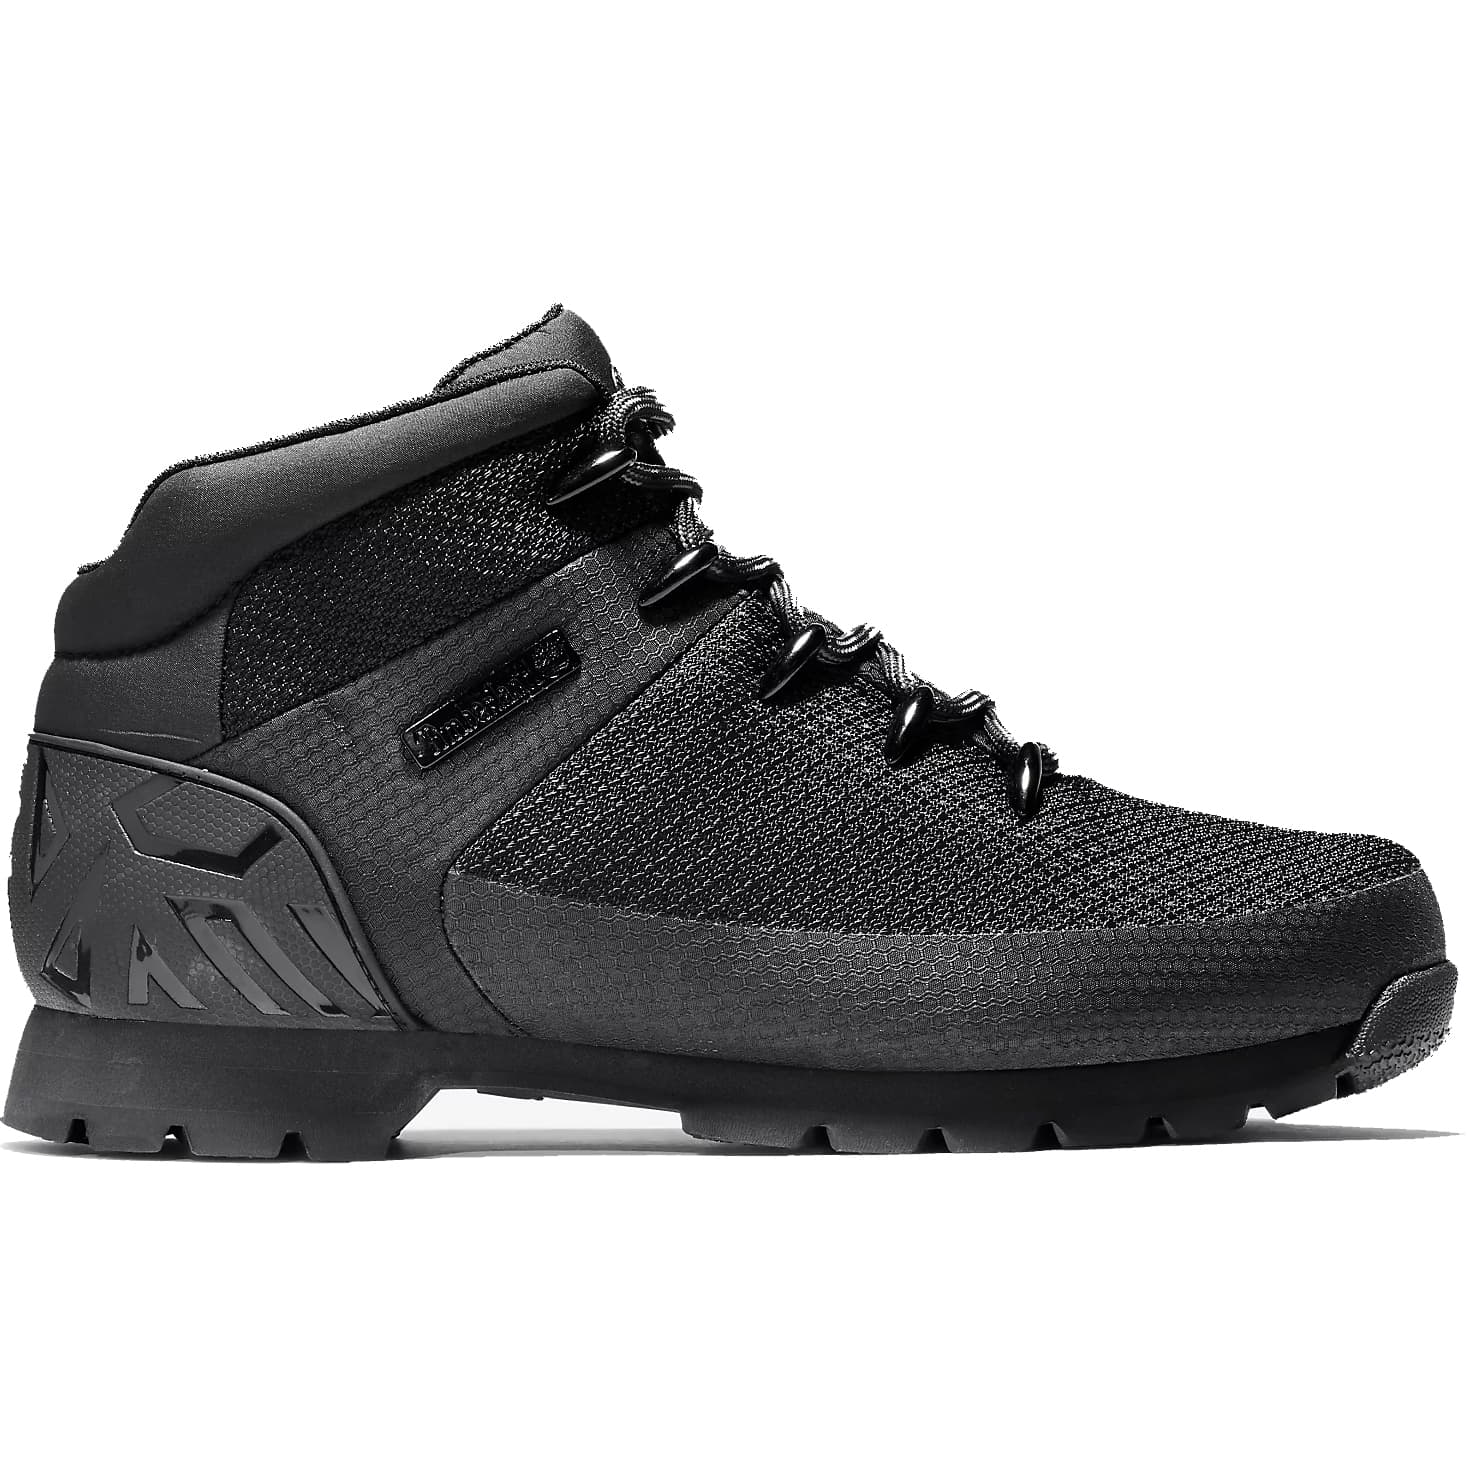 Timberland Mens Euro Sprint Waterproof Walking Chukka Ankle Boots - UK 10 Black 2951